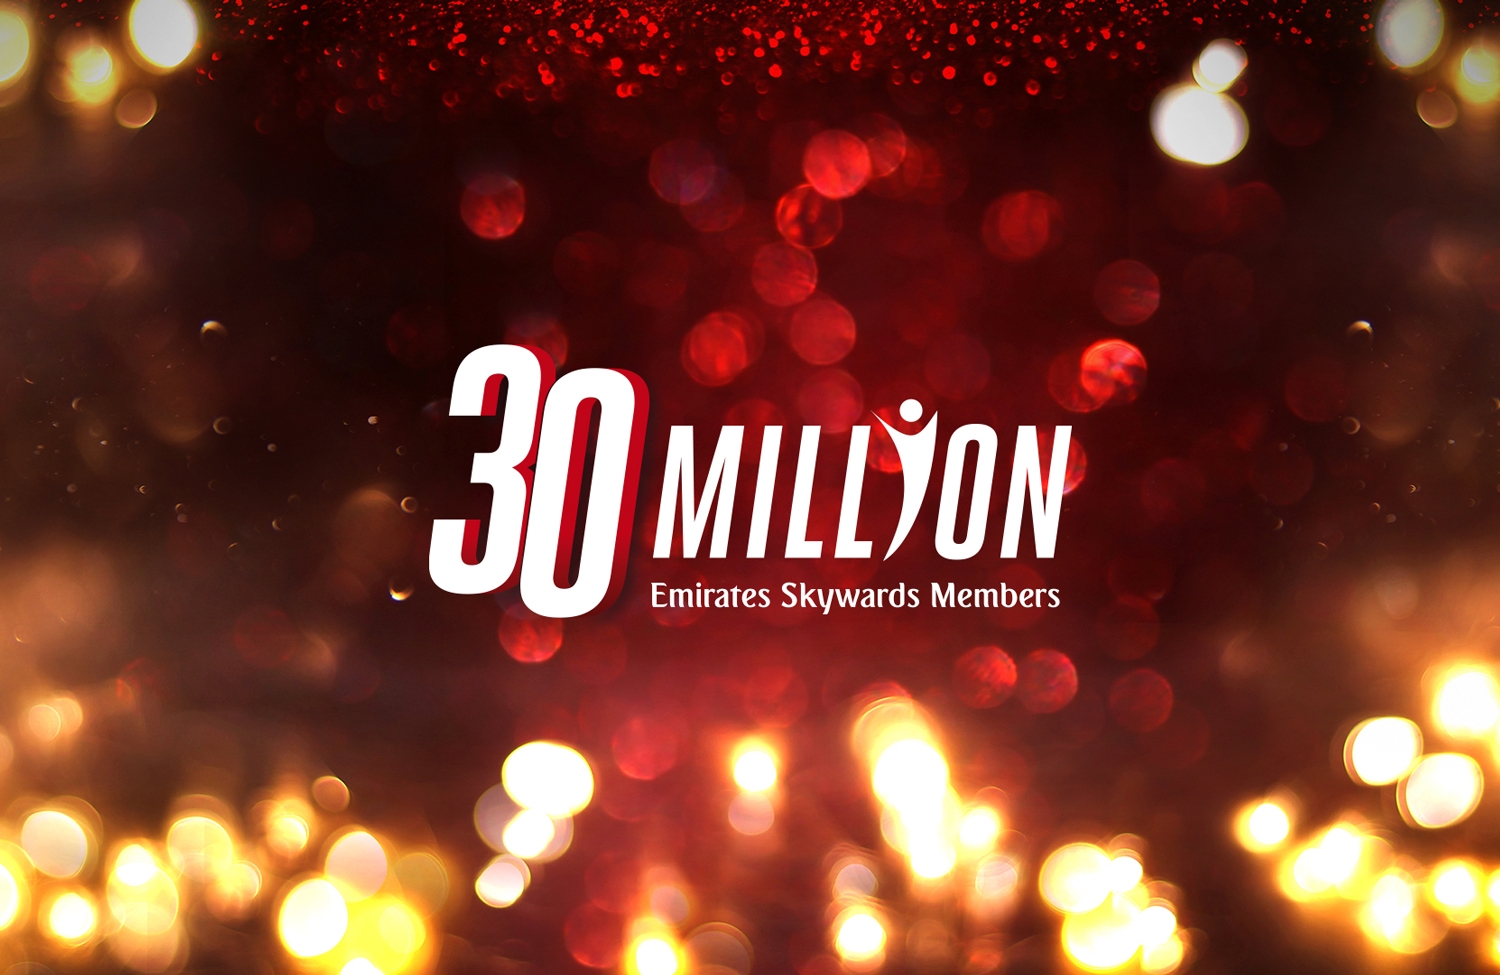 30 Million Member Milestone